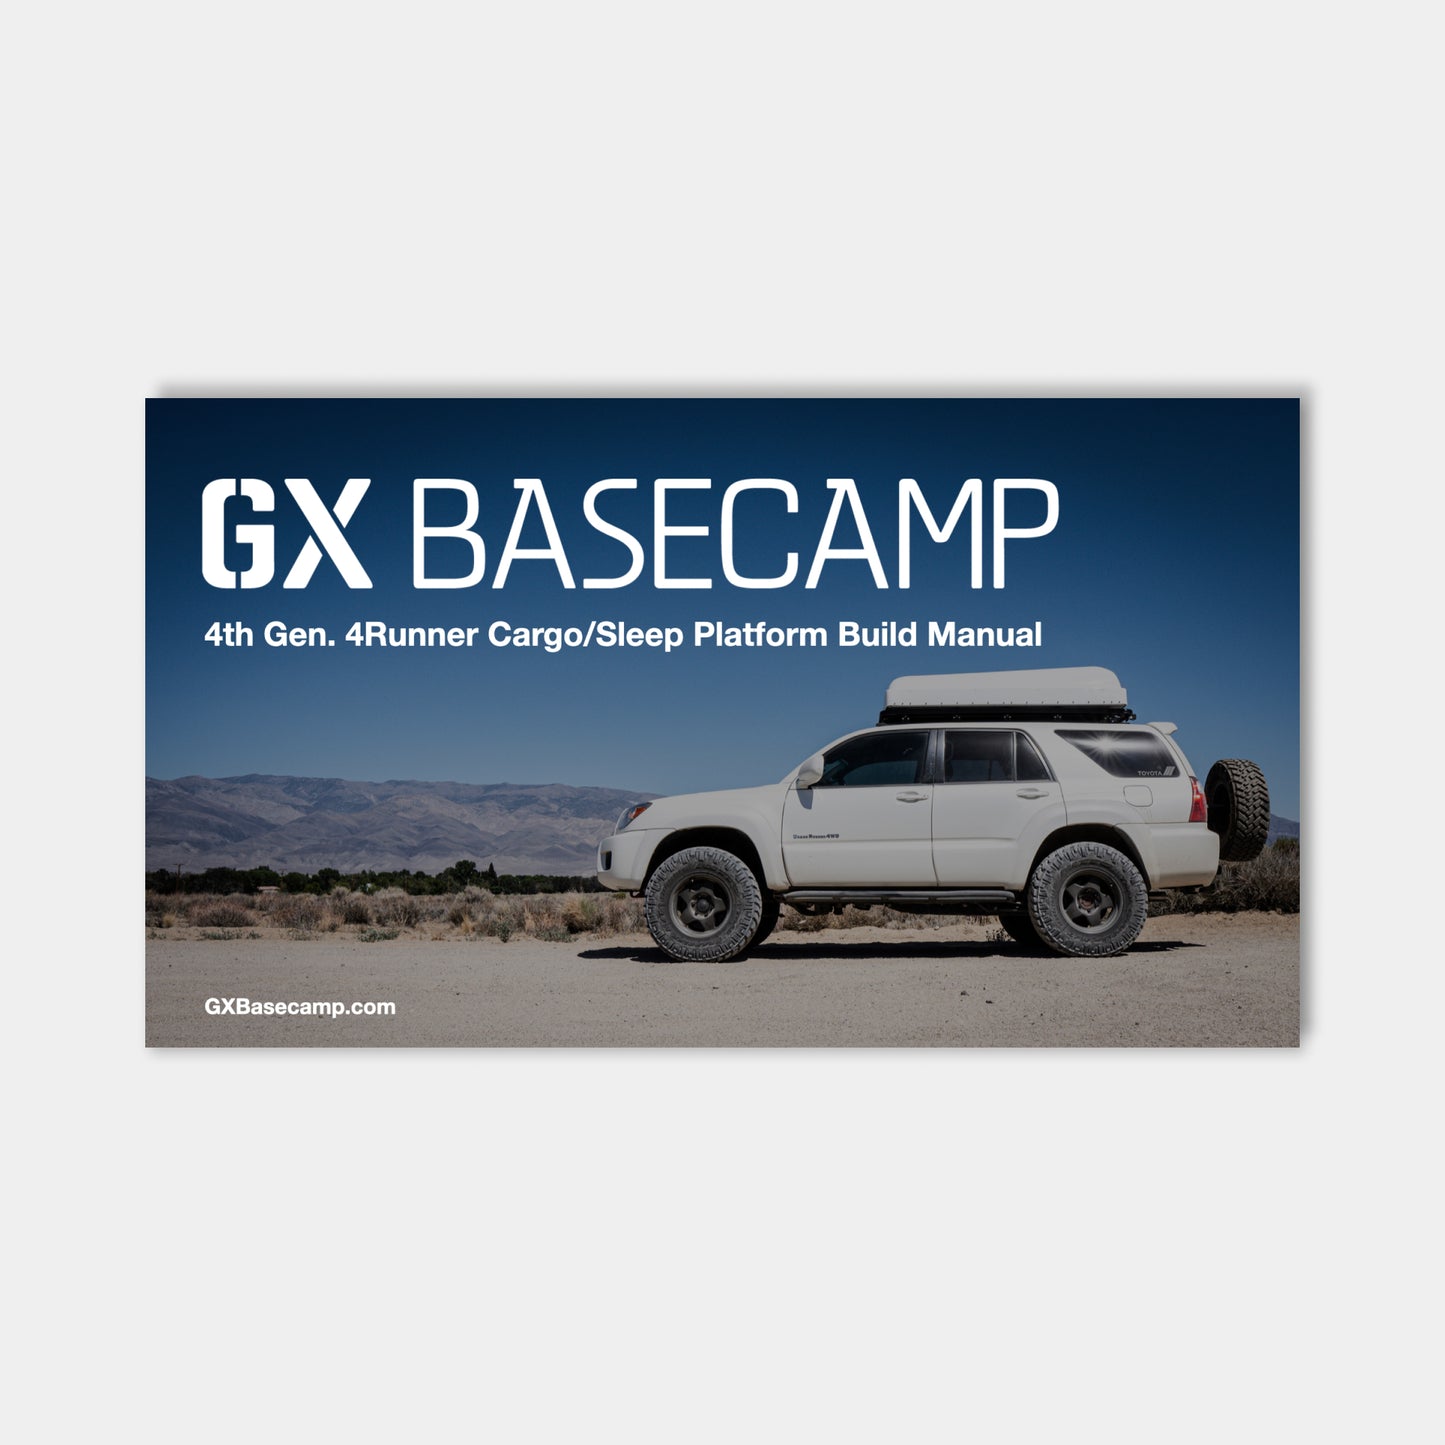 4th Gen. 4Runner Platform Build Manual - Go Xplore Basecamp